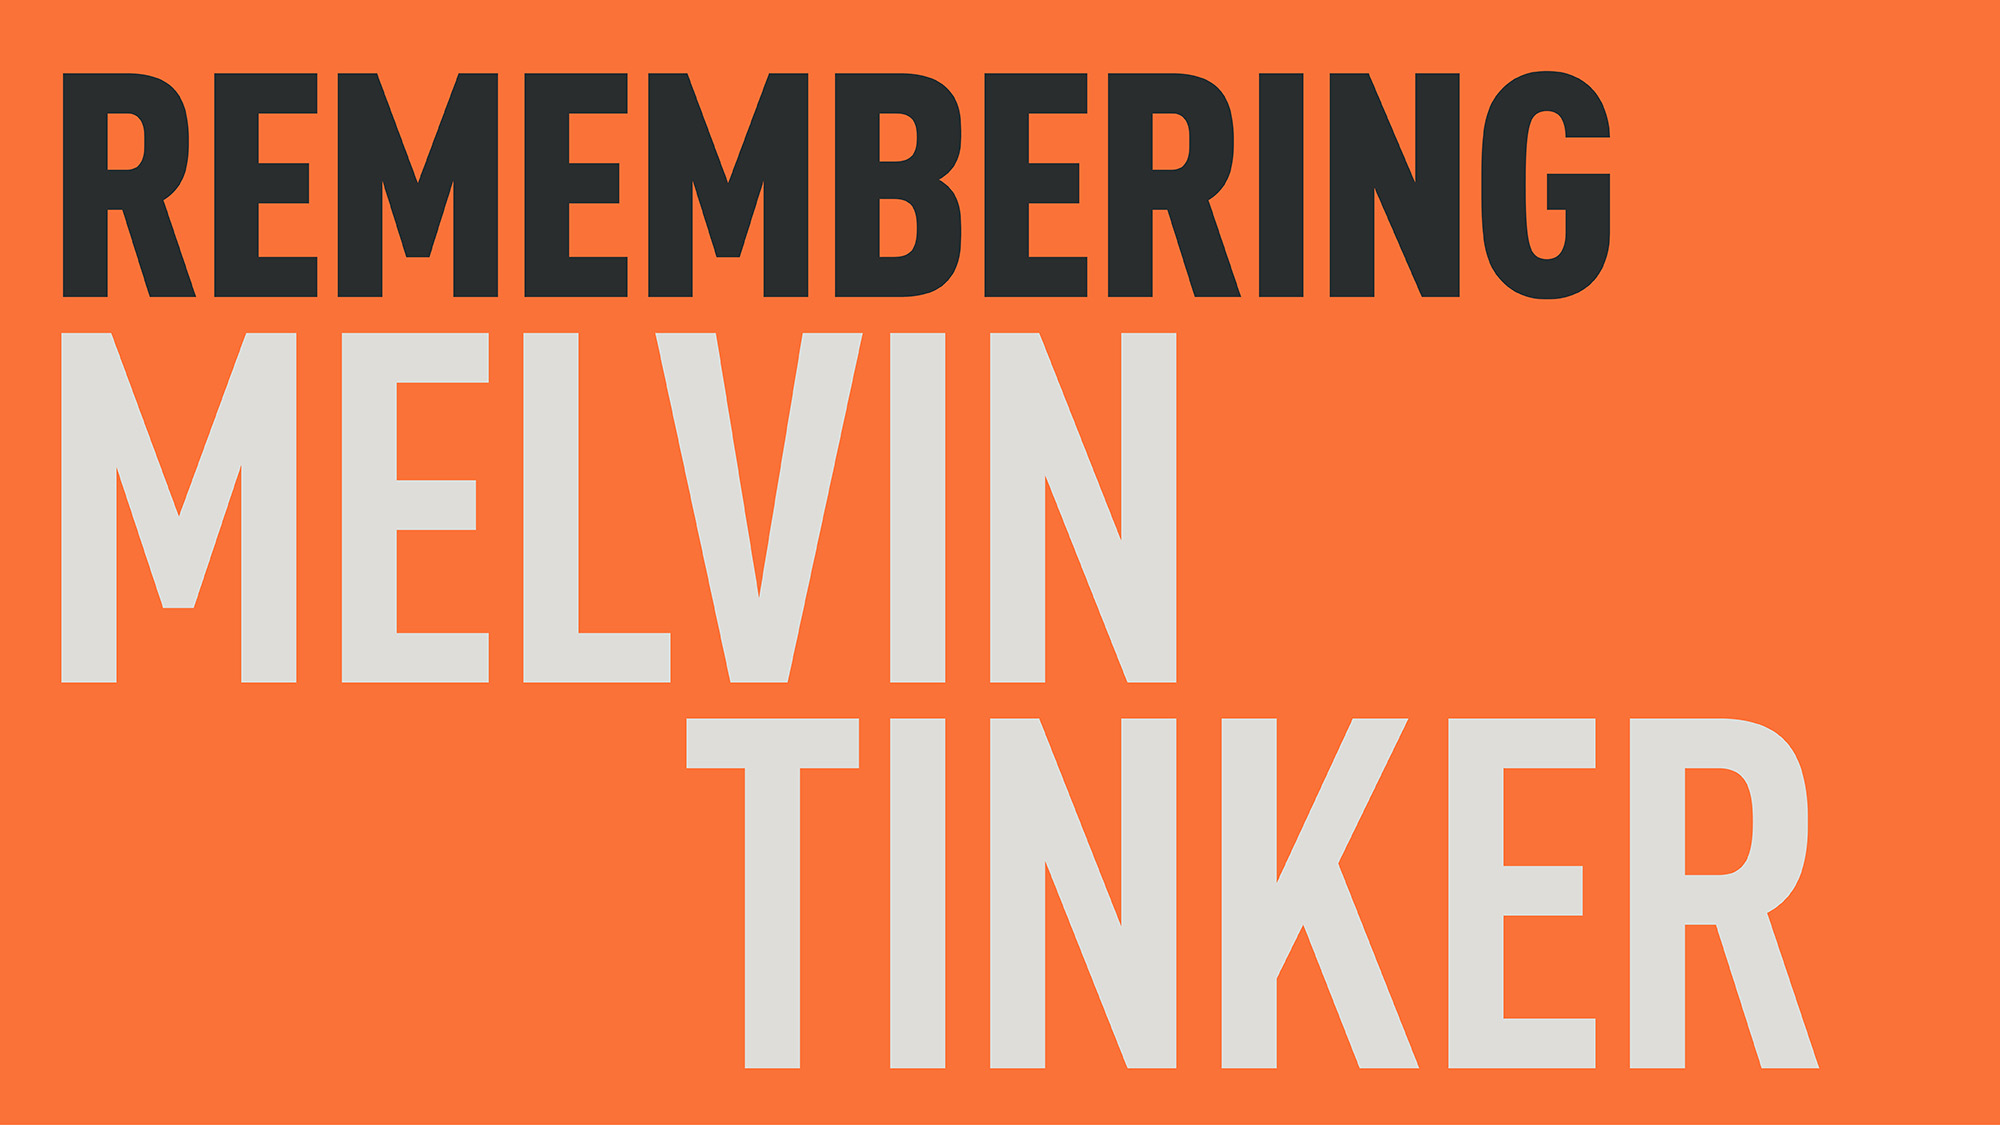 Remembering Melvin Tinker